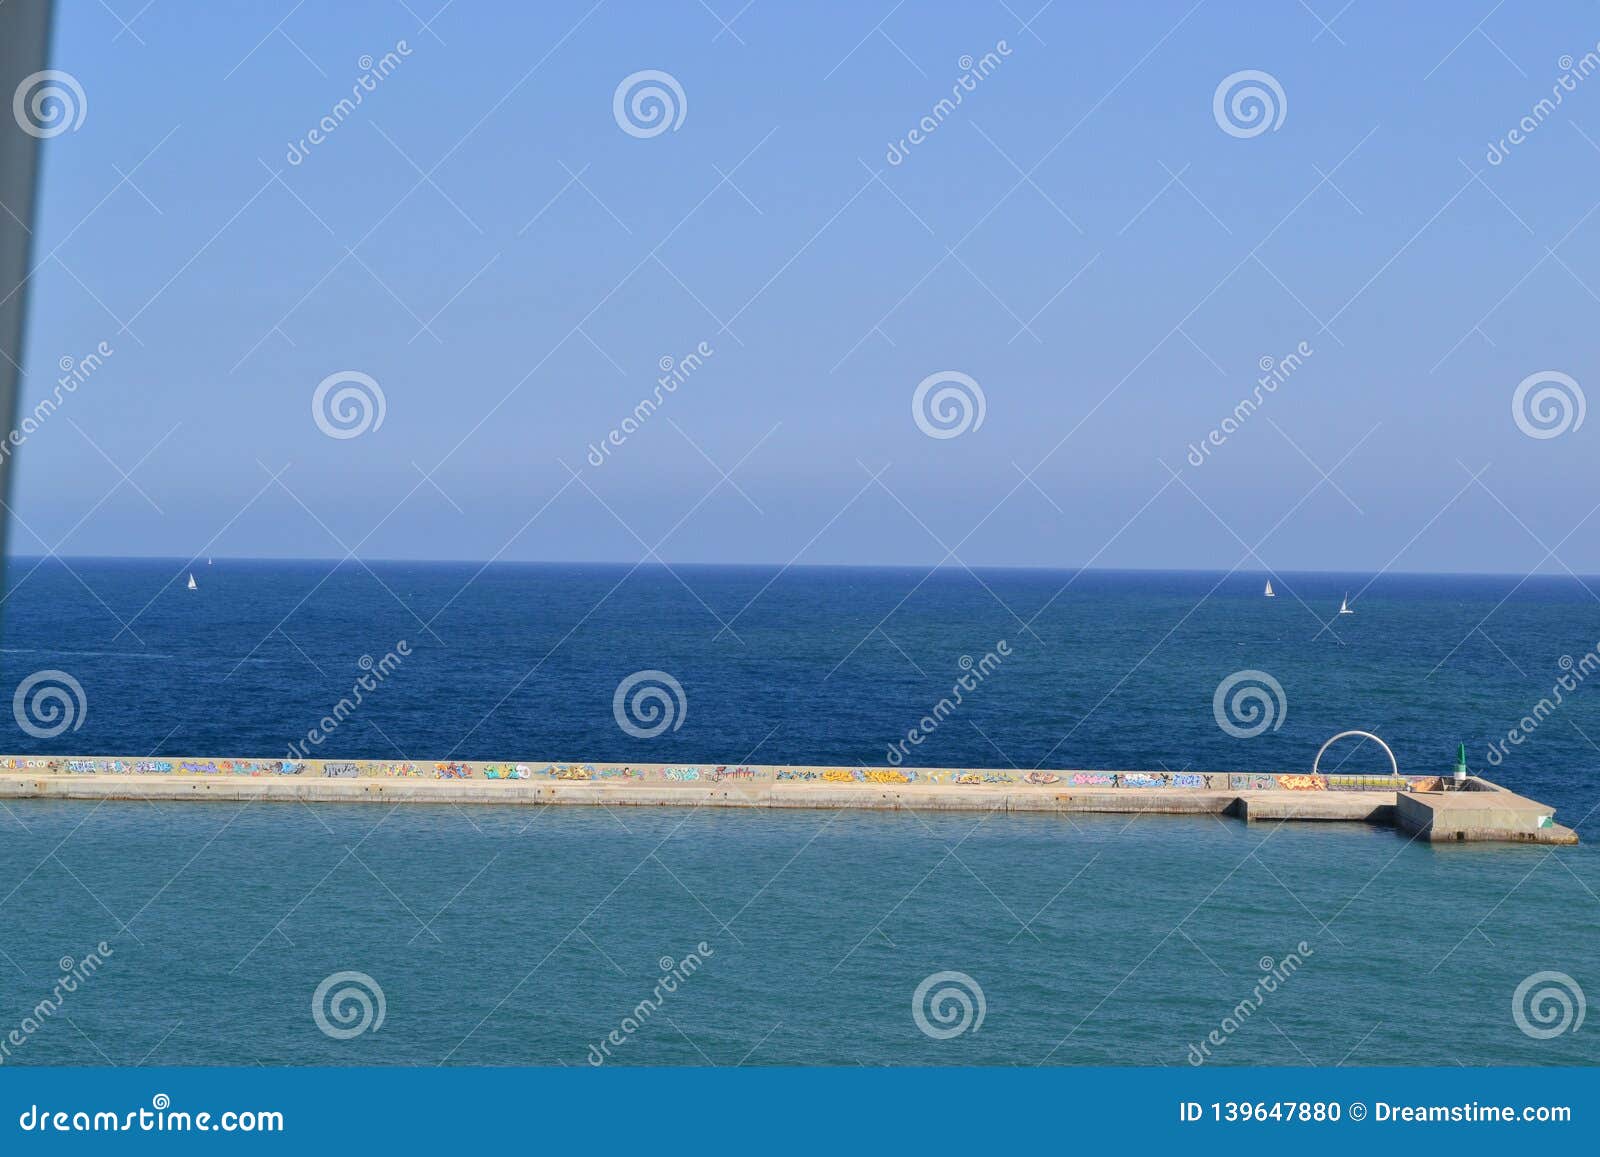 mediterranean sea view from la playa de la barceloneta - barcelona spain